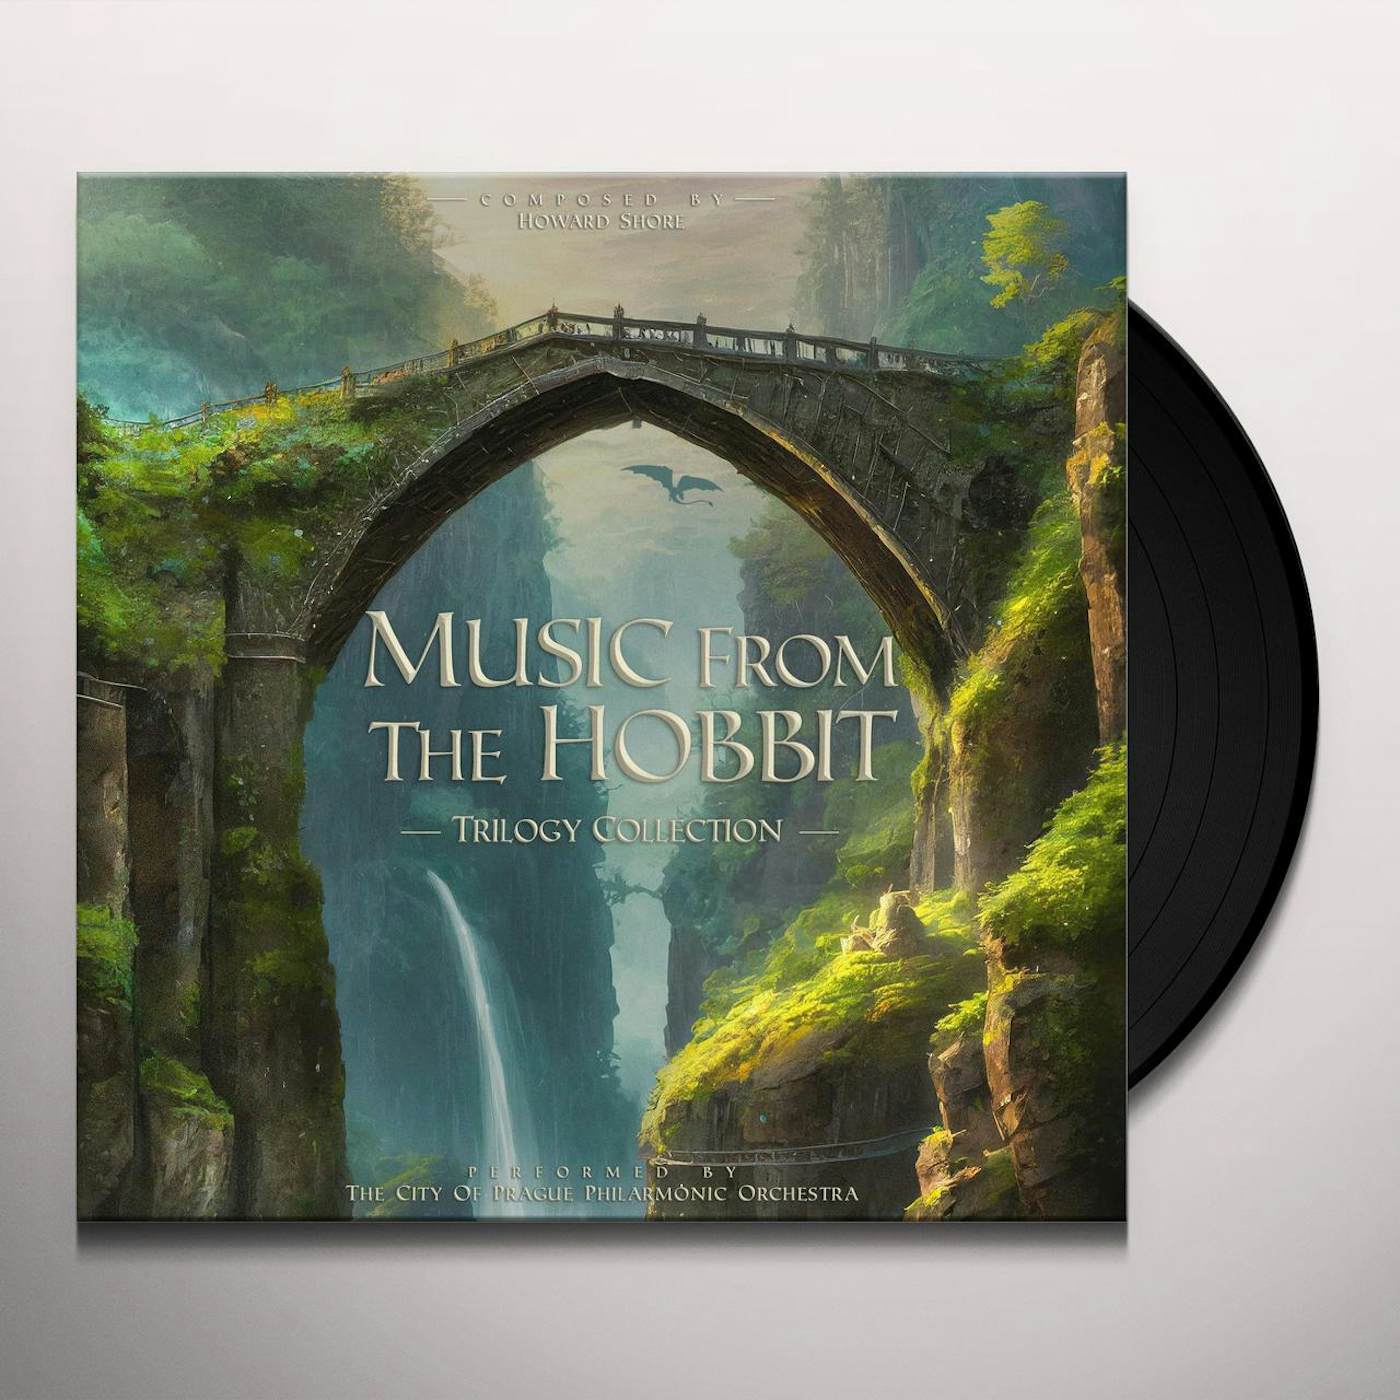 The City of Prague Philharmonic Orchestra  The Hobbit - Film Music Collection (Original Soundtrack) Vinyl Record